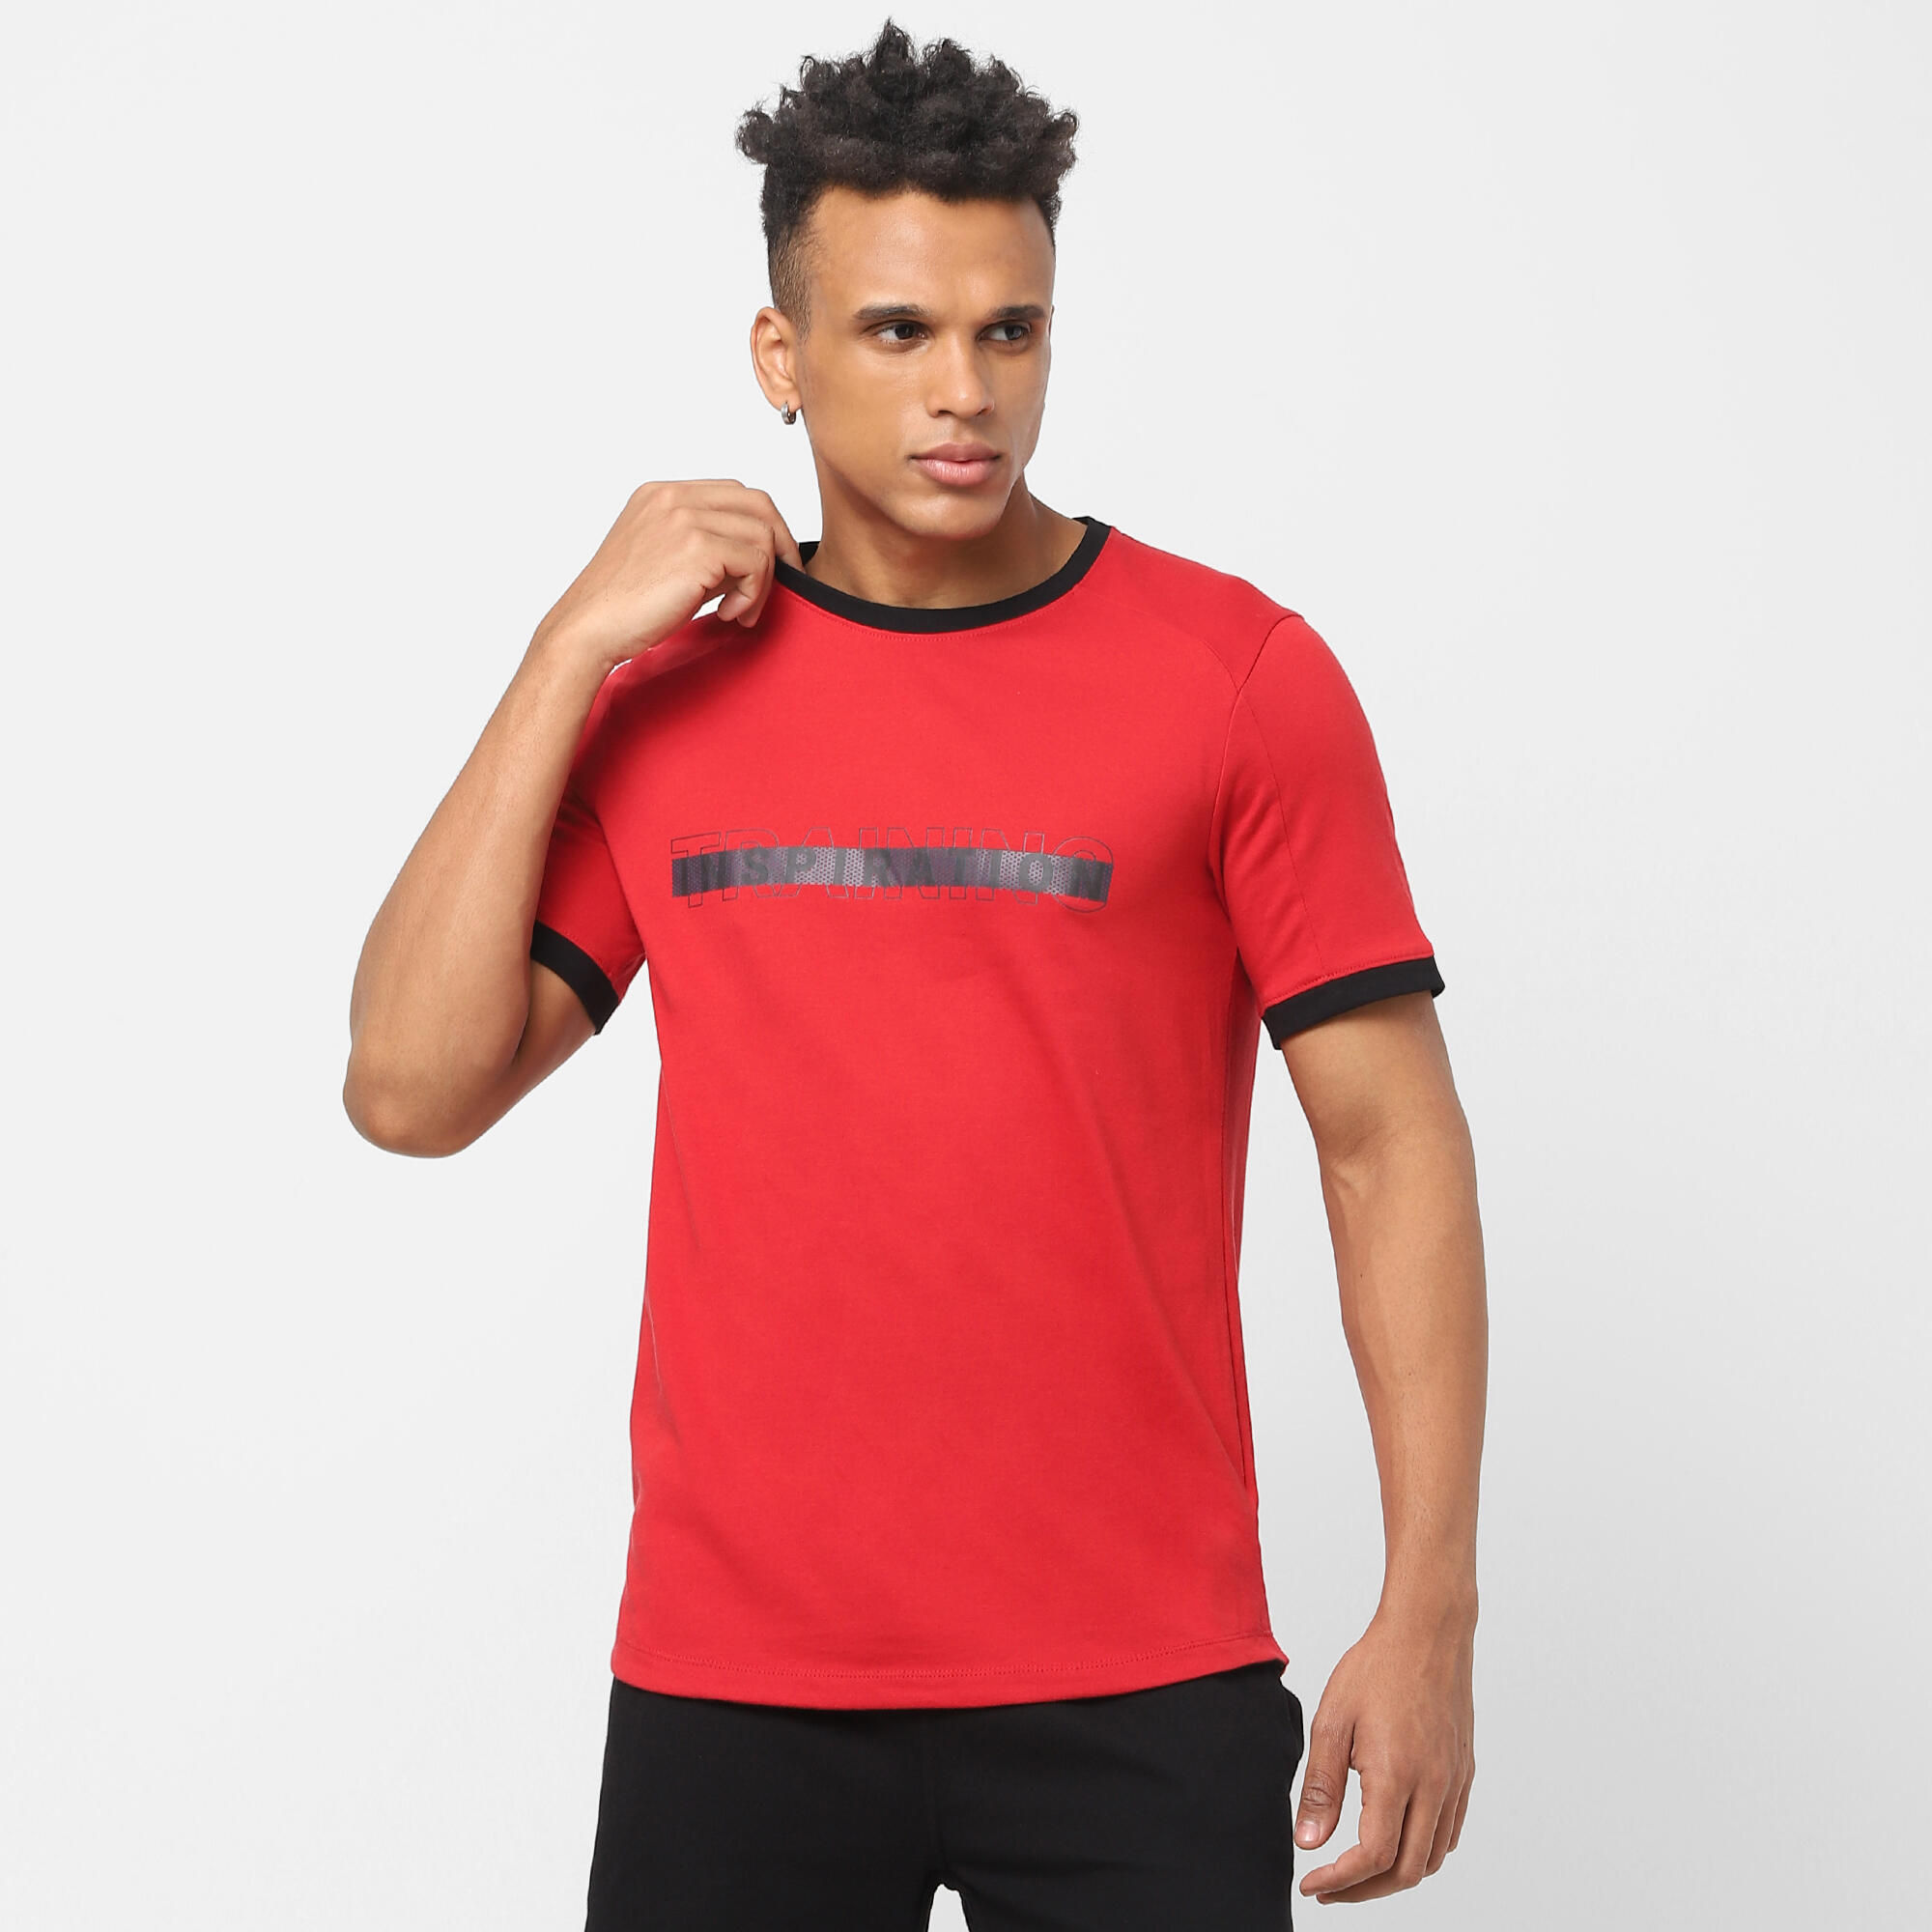 Men's Short-Sleeved Fitted-Cut Crew Neck Cotton Fitness T-Shirt 520 - Garnet Red 3/7